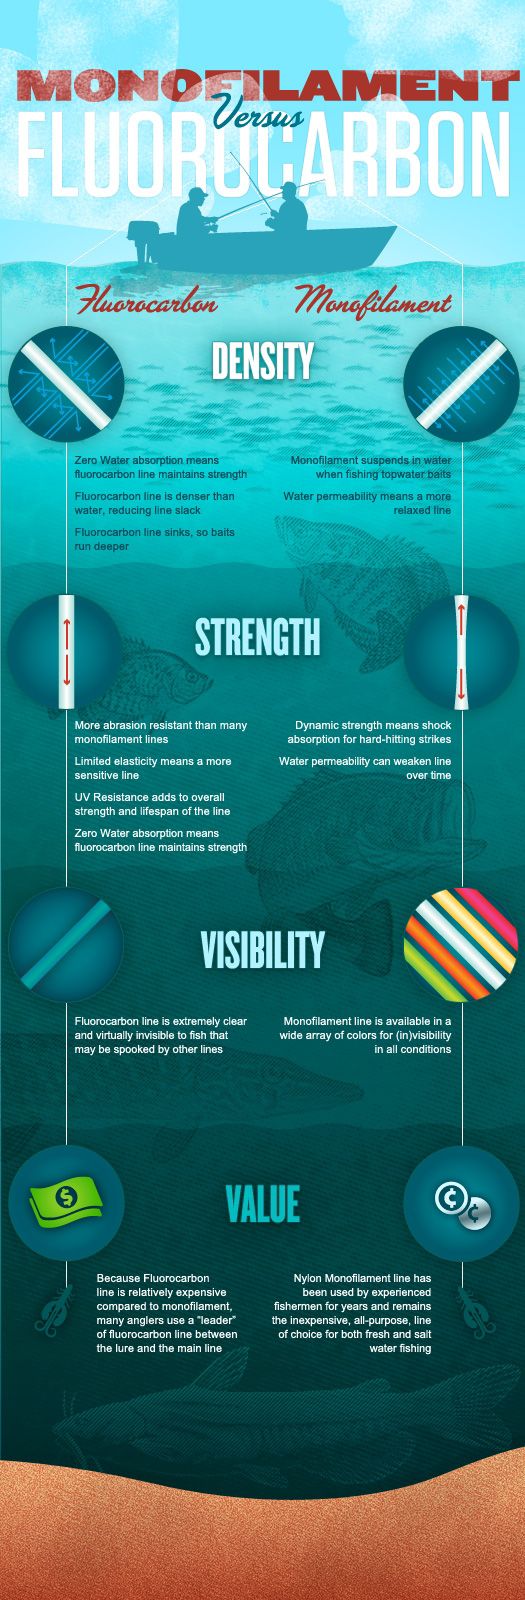 Monofilament VS Fluorocarbon - Infographic - Berkley® Fishing US